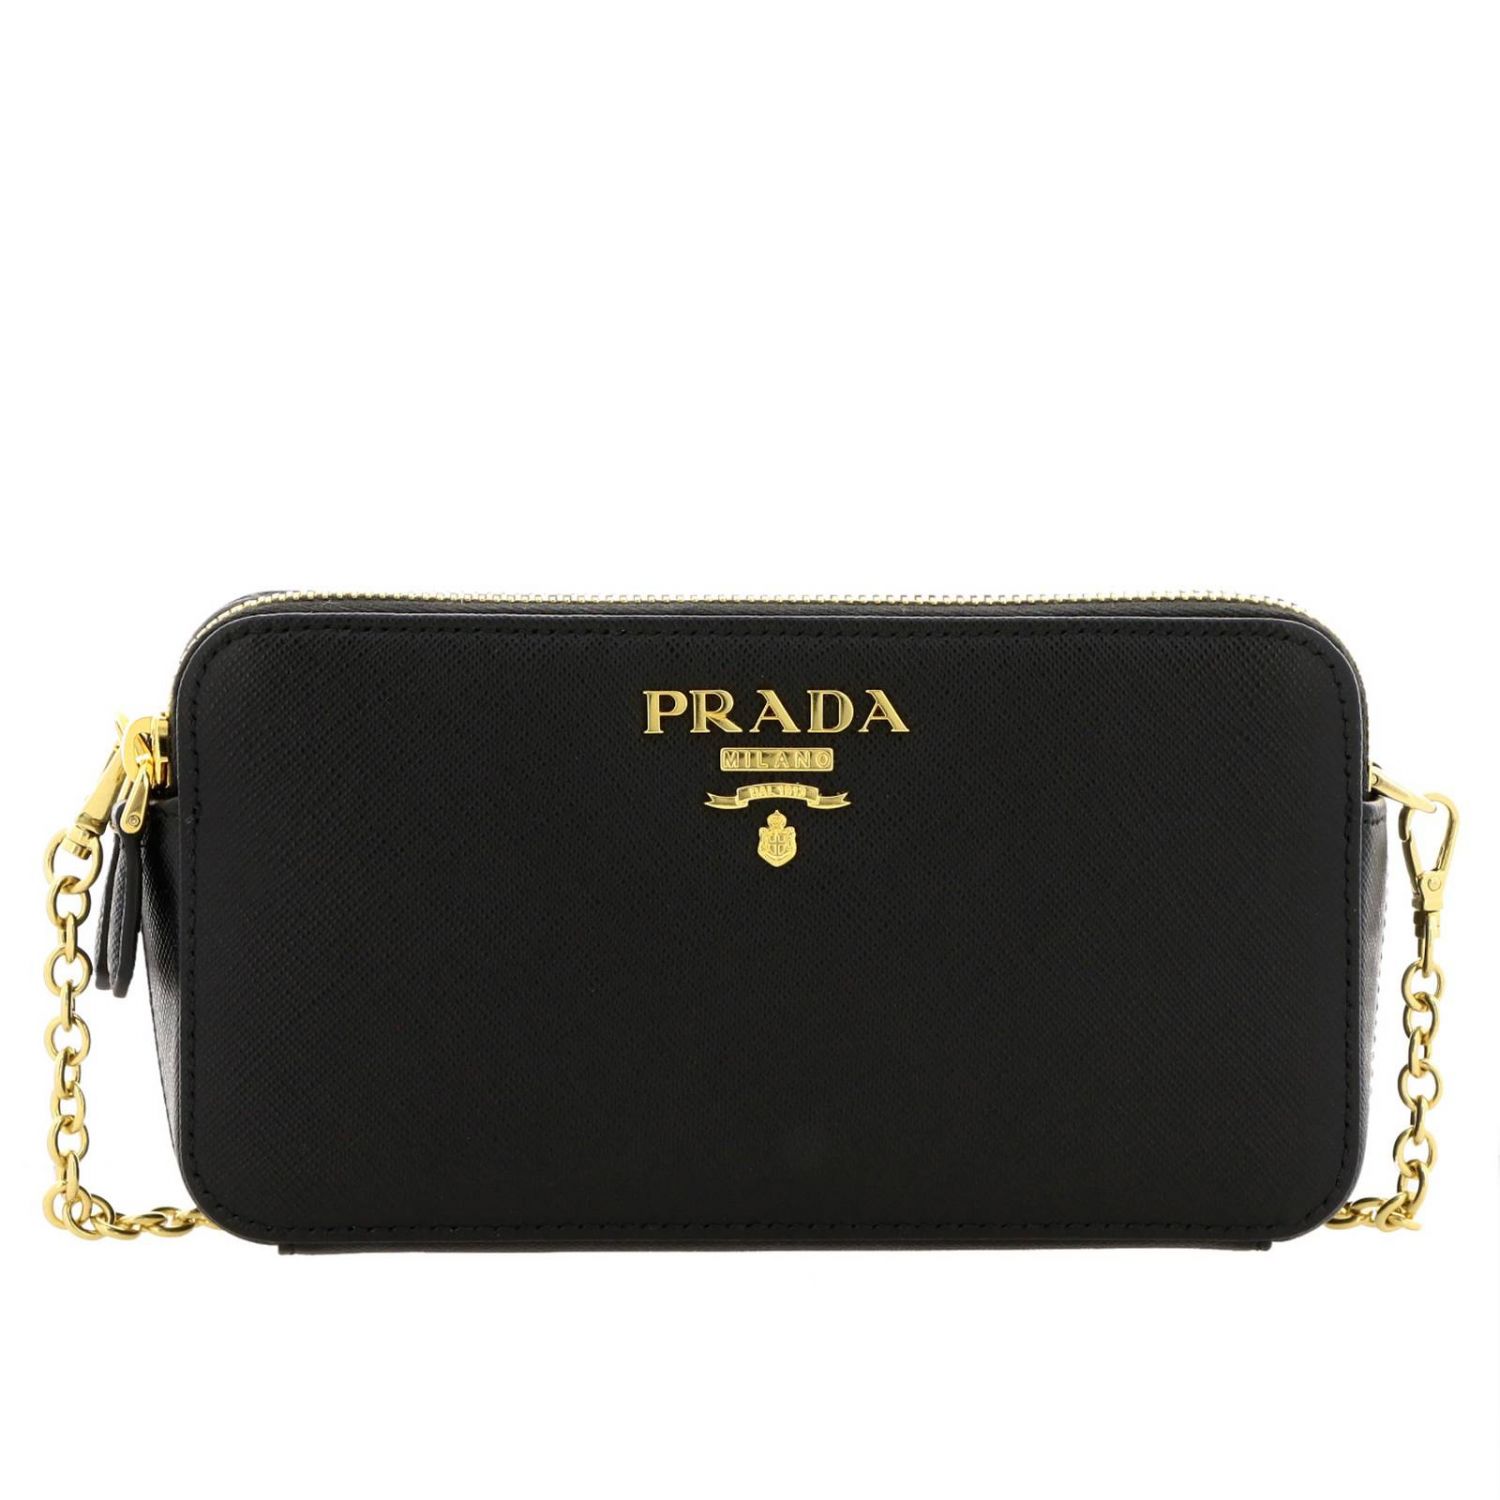 PRADA: shoulder bag in saffiano leather with metal logo - Black | Prada ...